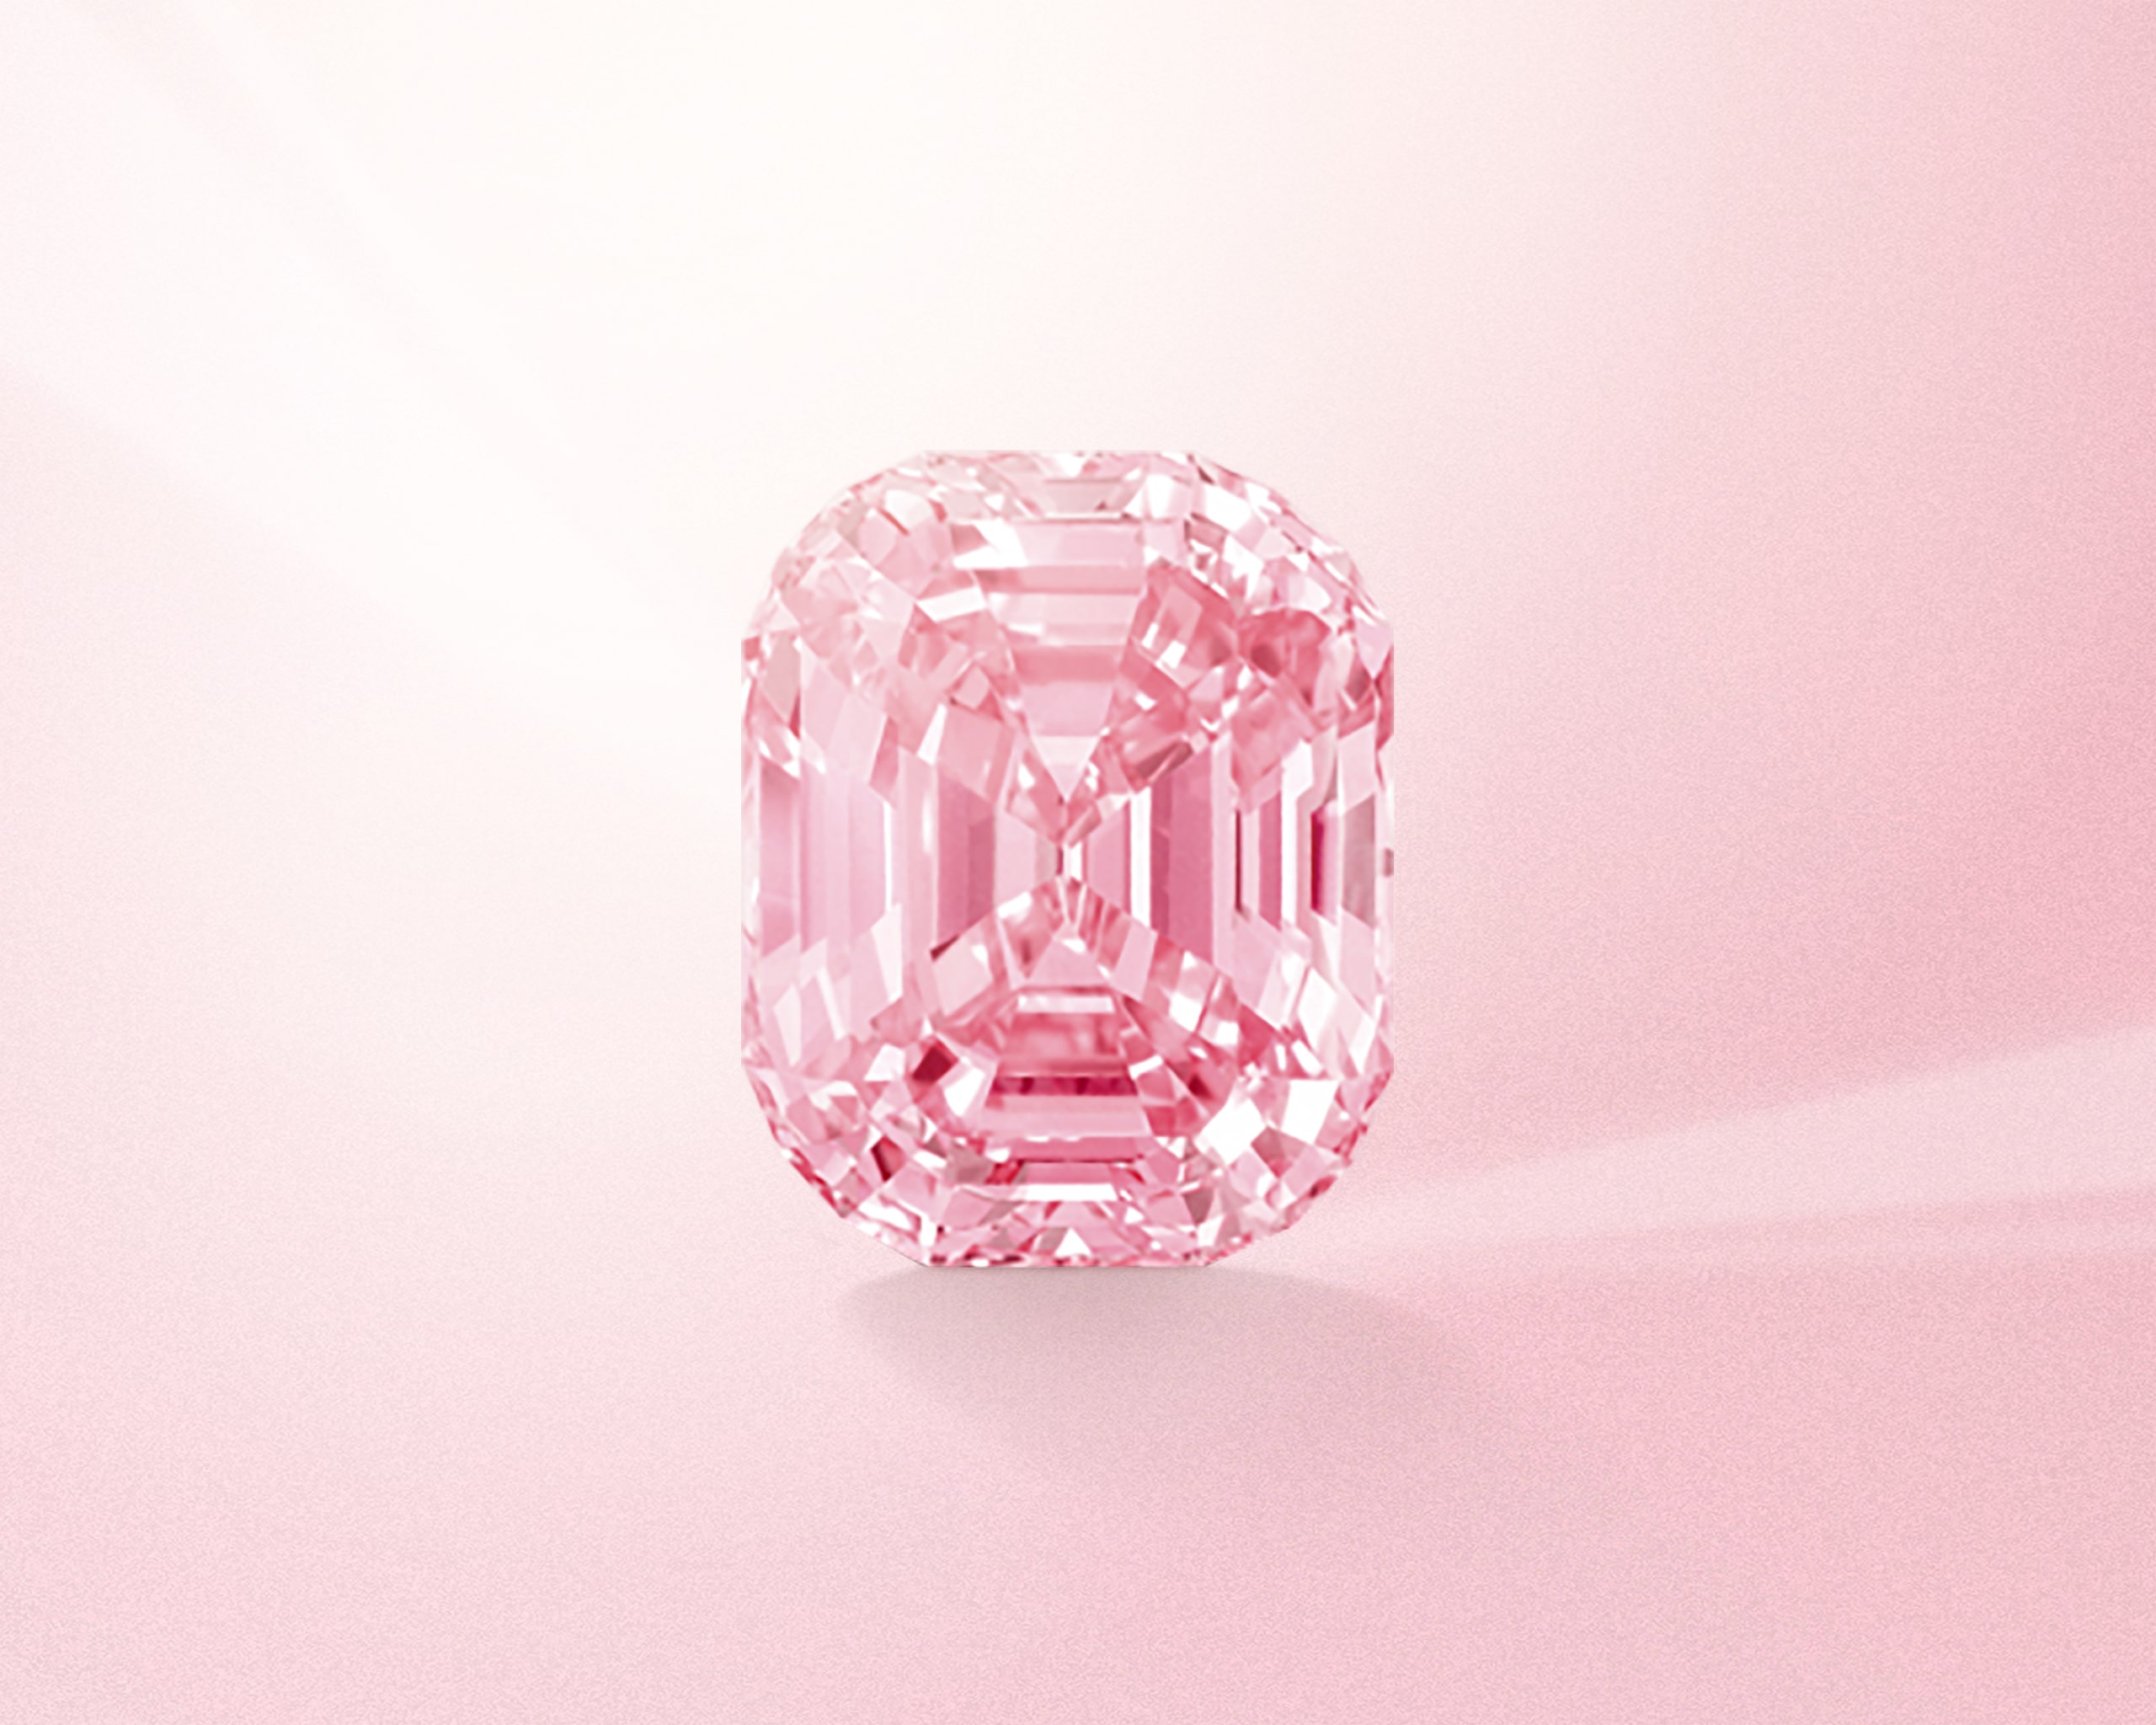 Large squared emerald cut pink diamond by Graff